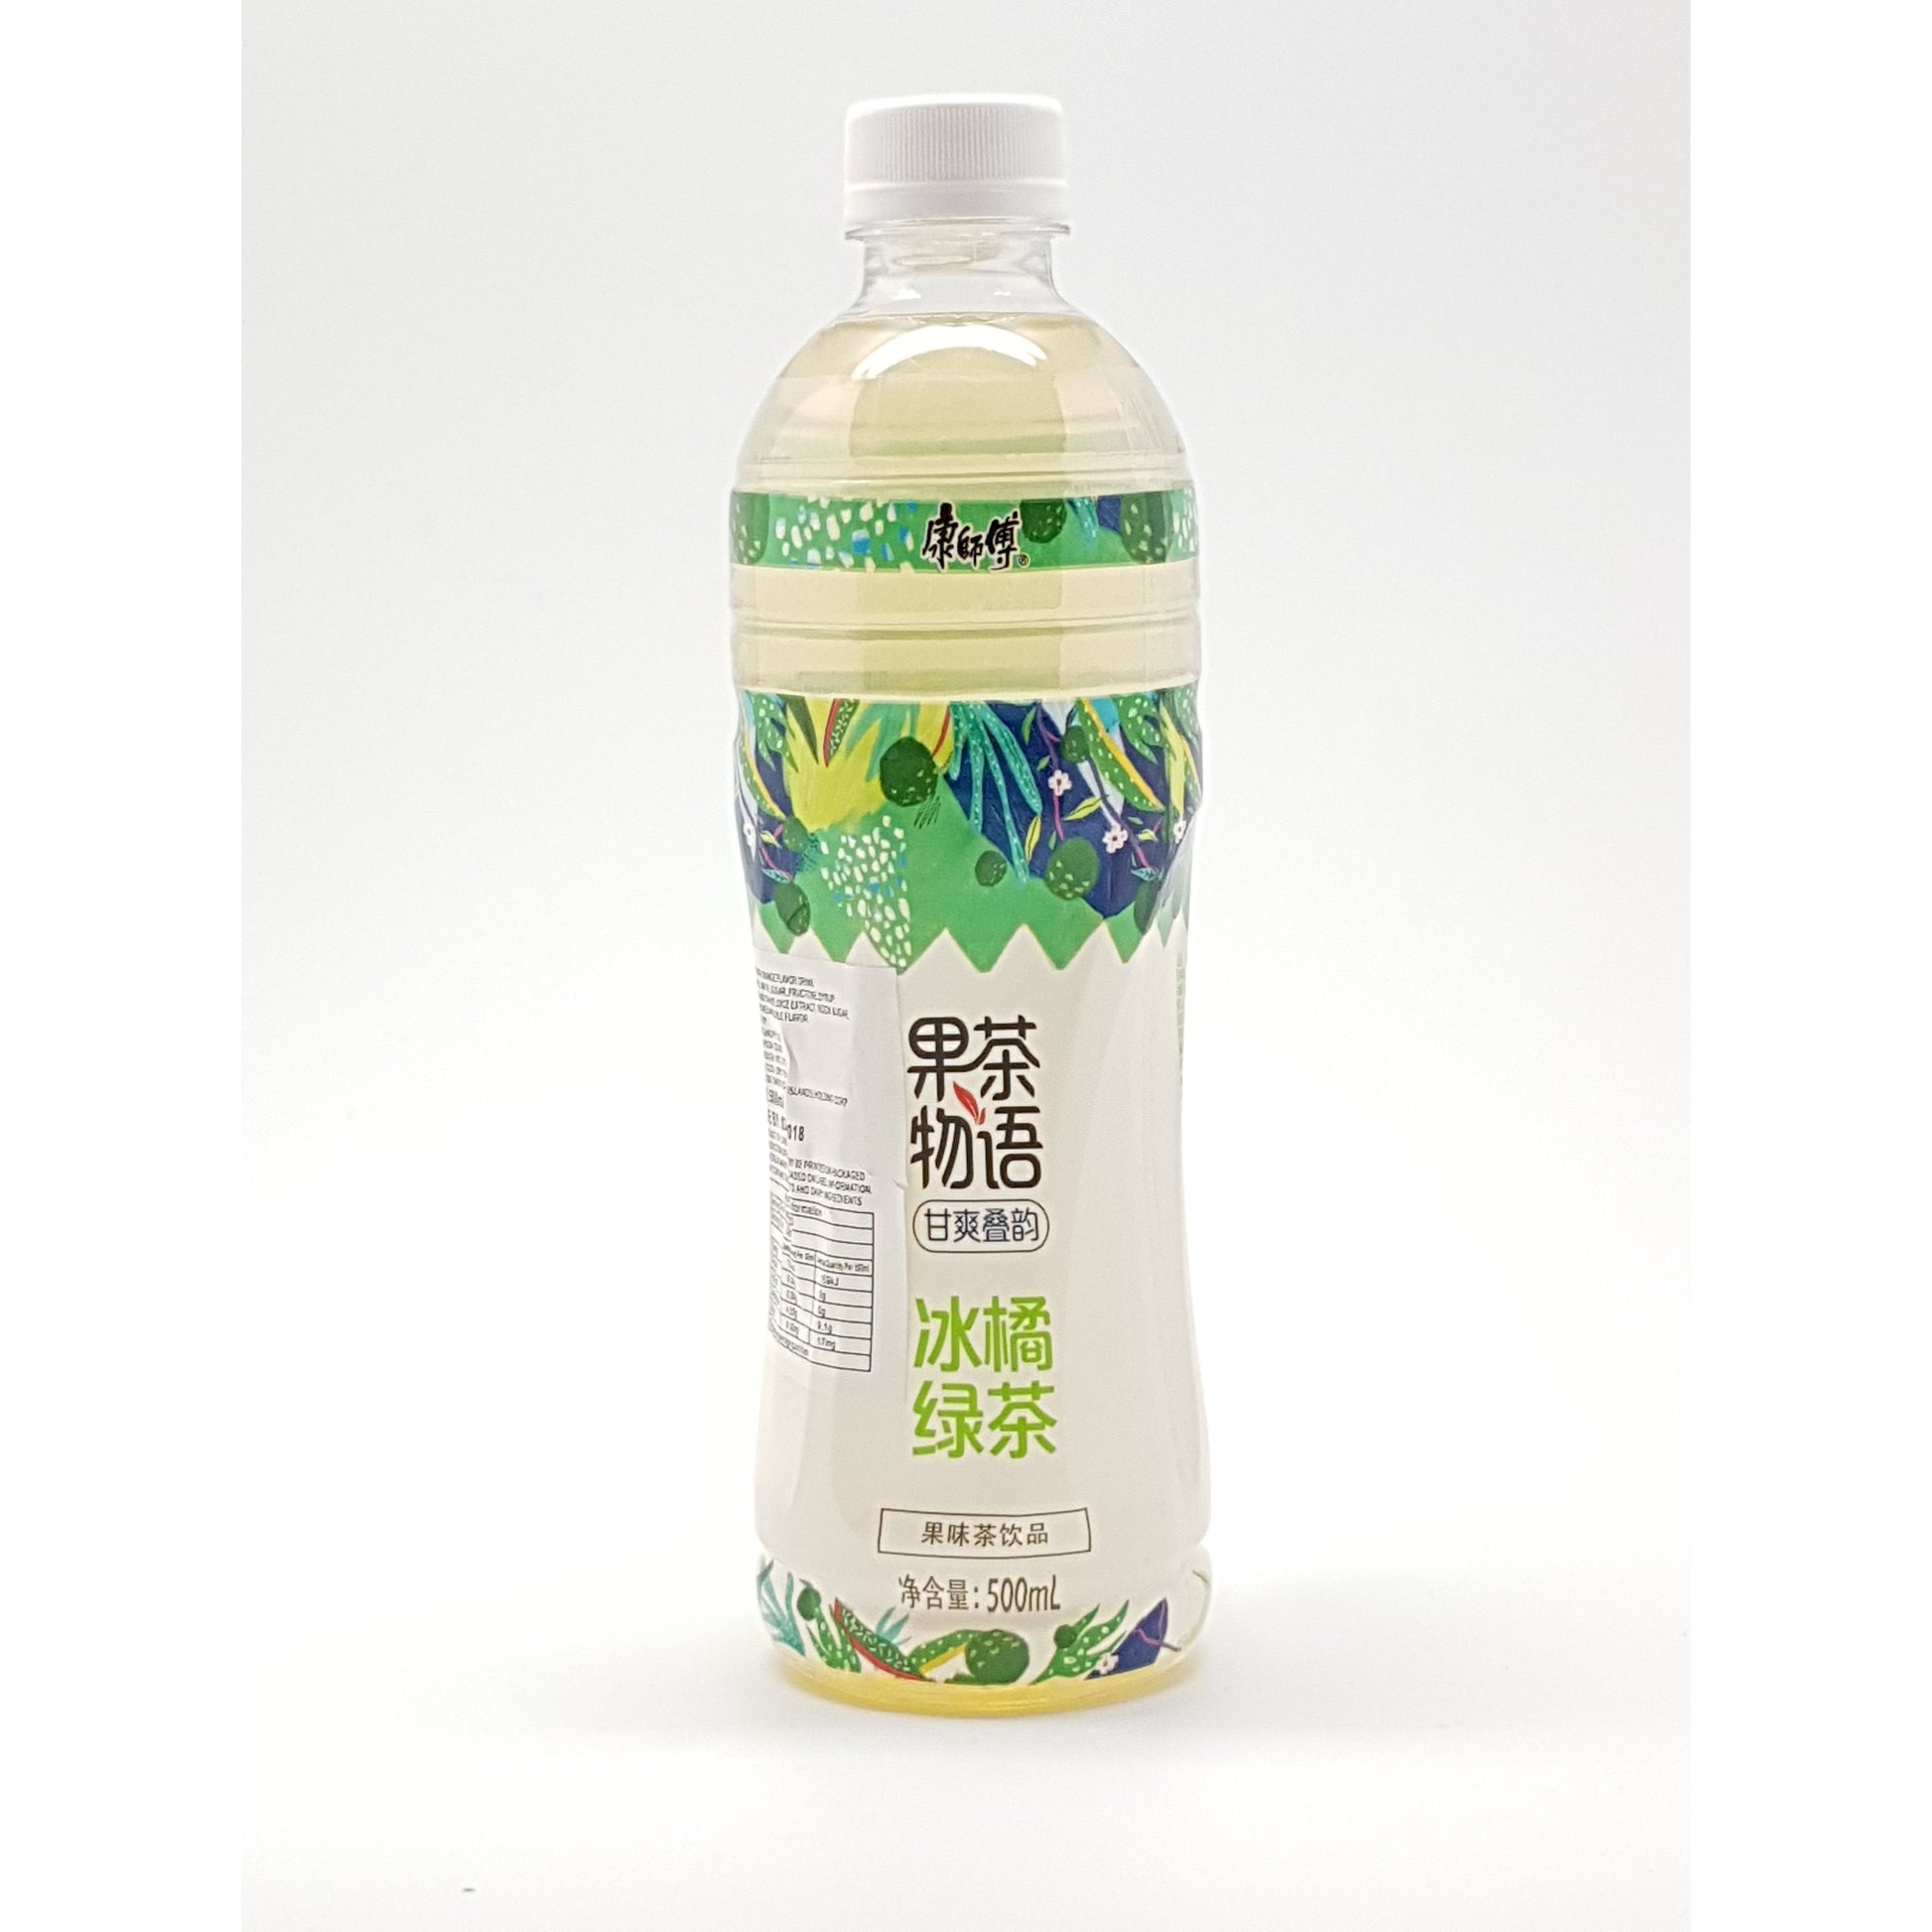 B004CO Kon Brand - Green Tea Drinks Mandarin Flavour 500ml - 15 bot/1ctn - New Eastland Pty Ltd - Asian food wholesalers